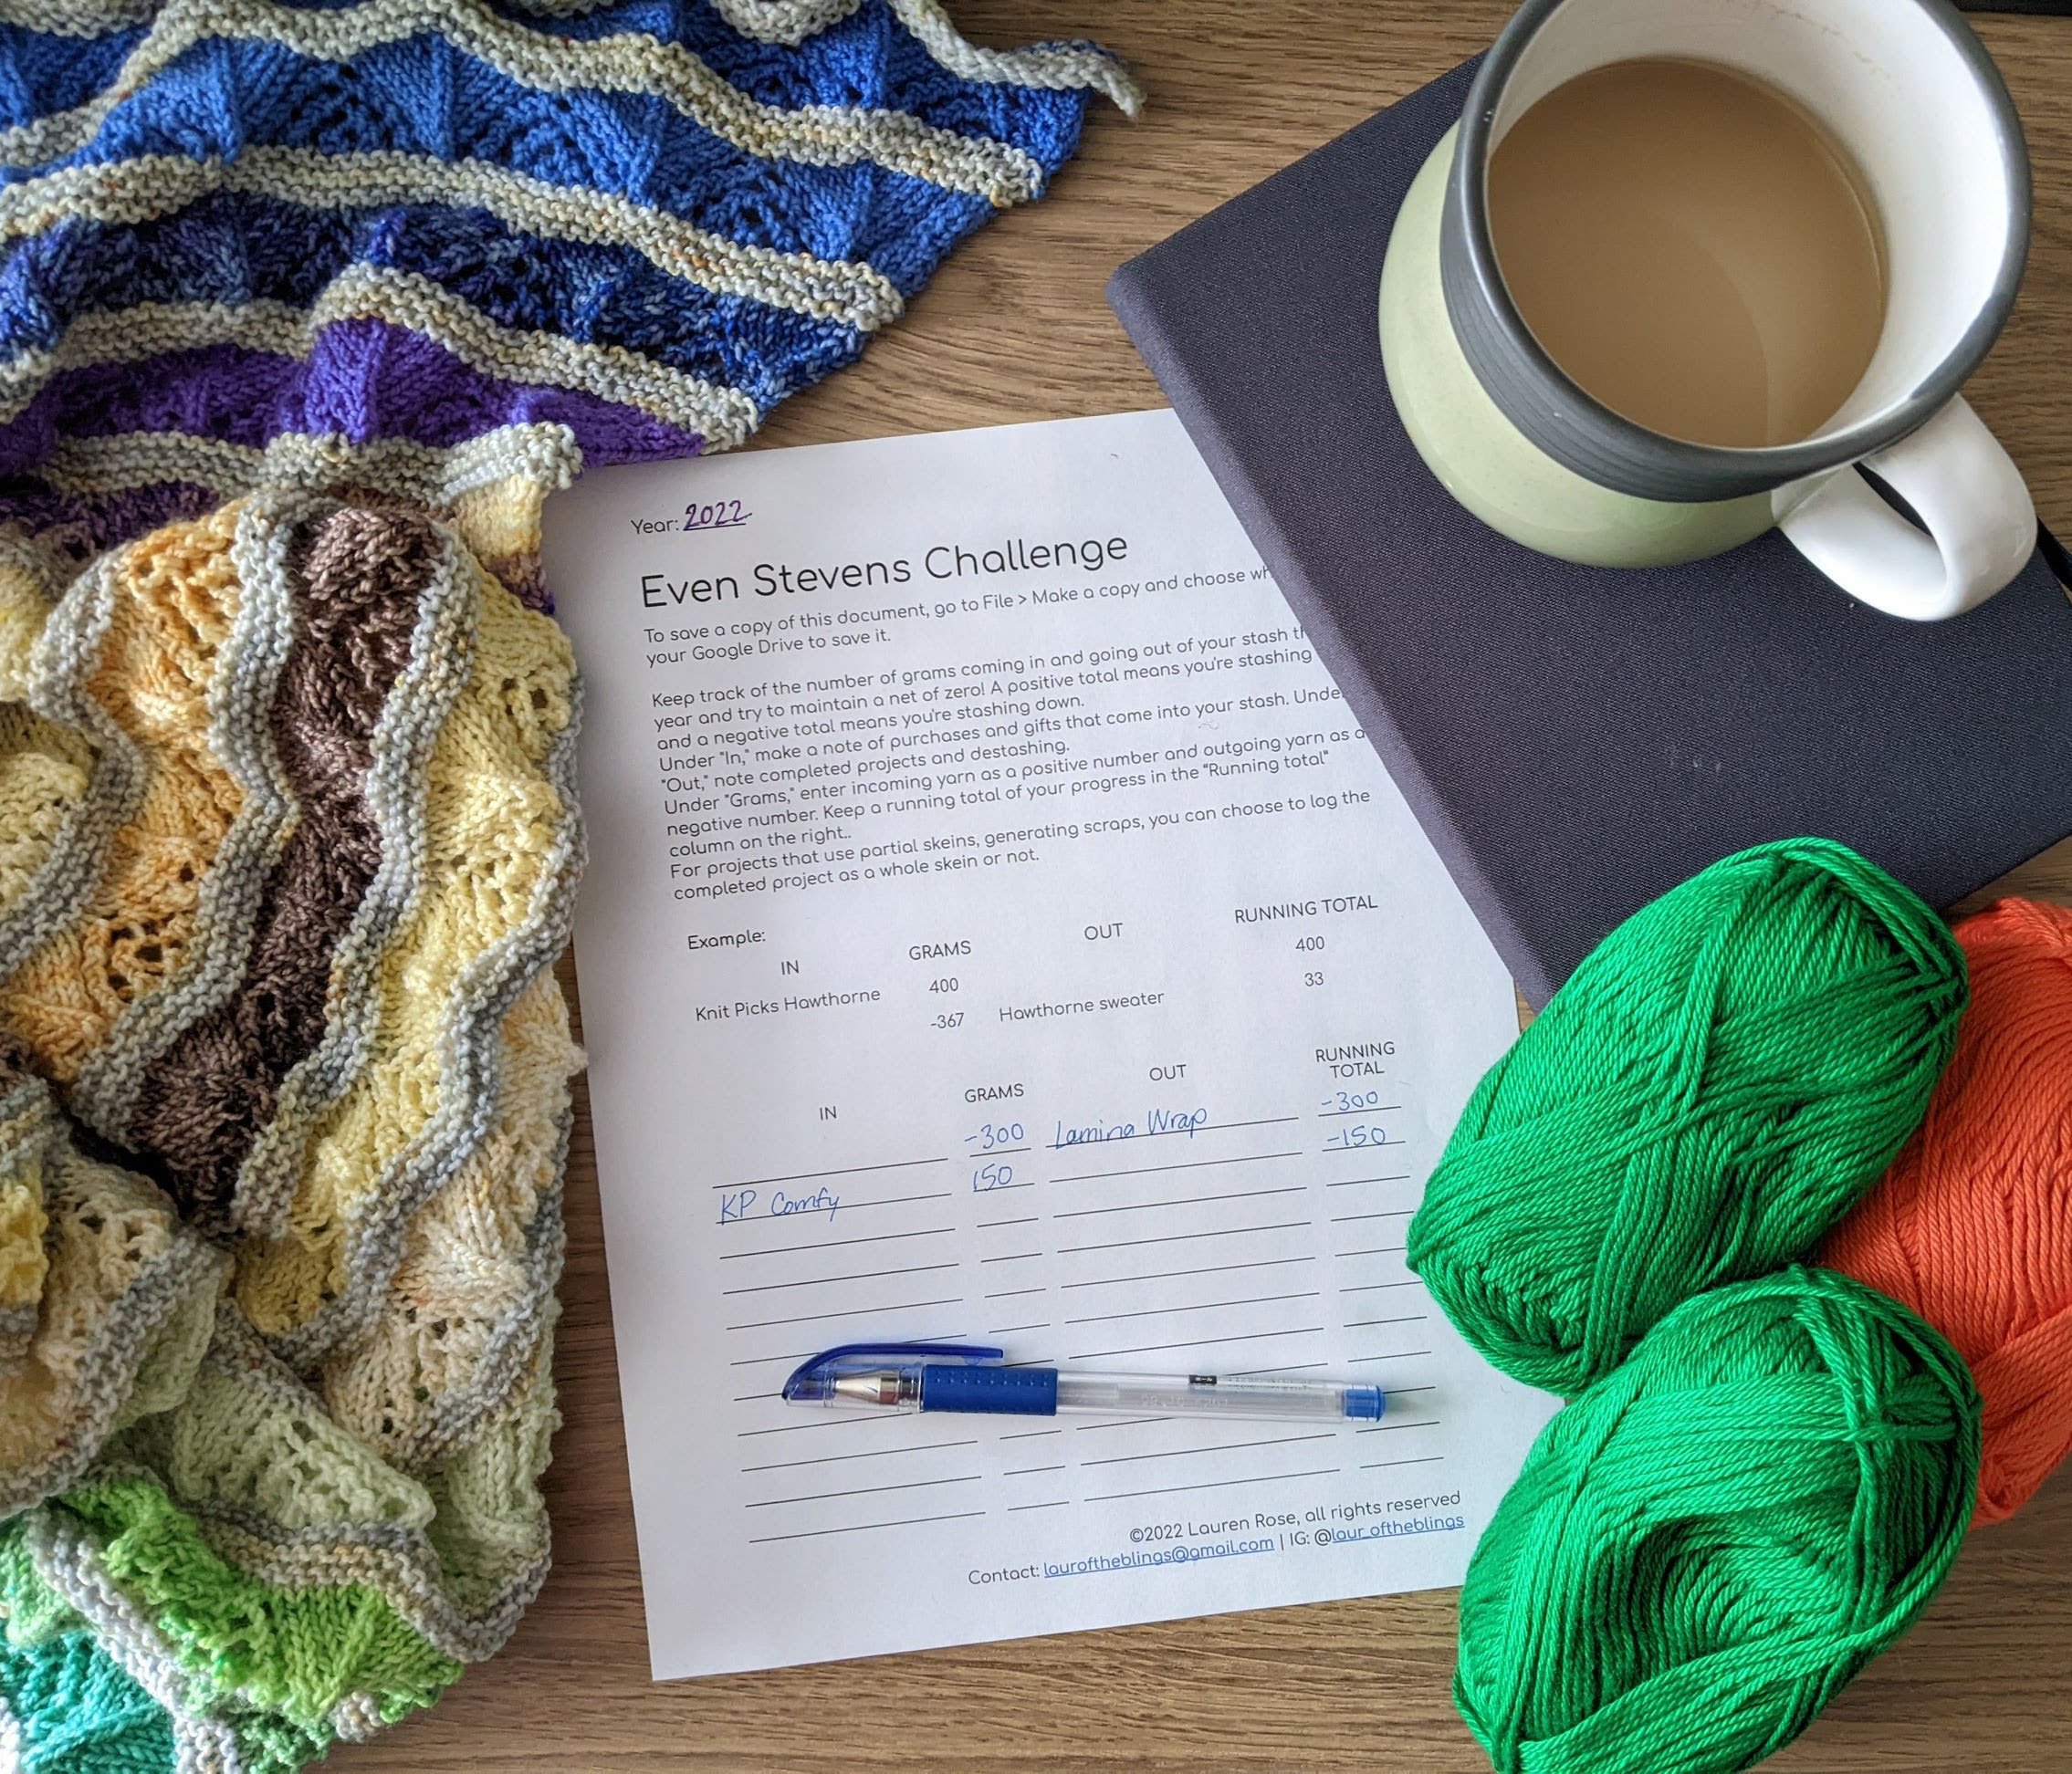 Mixed Yarn Cakes 6 Skeins Destash Bundles for Knitting Crochet